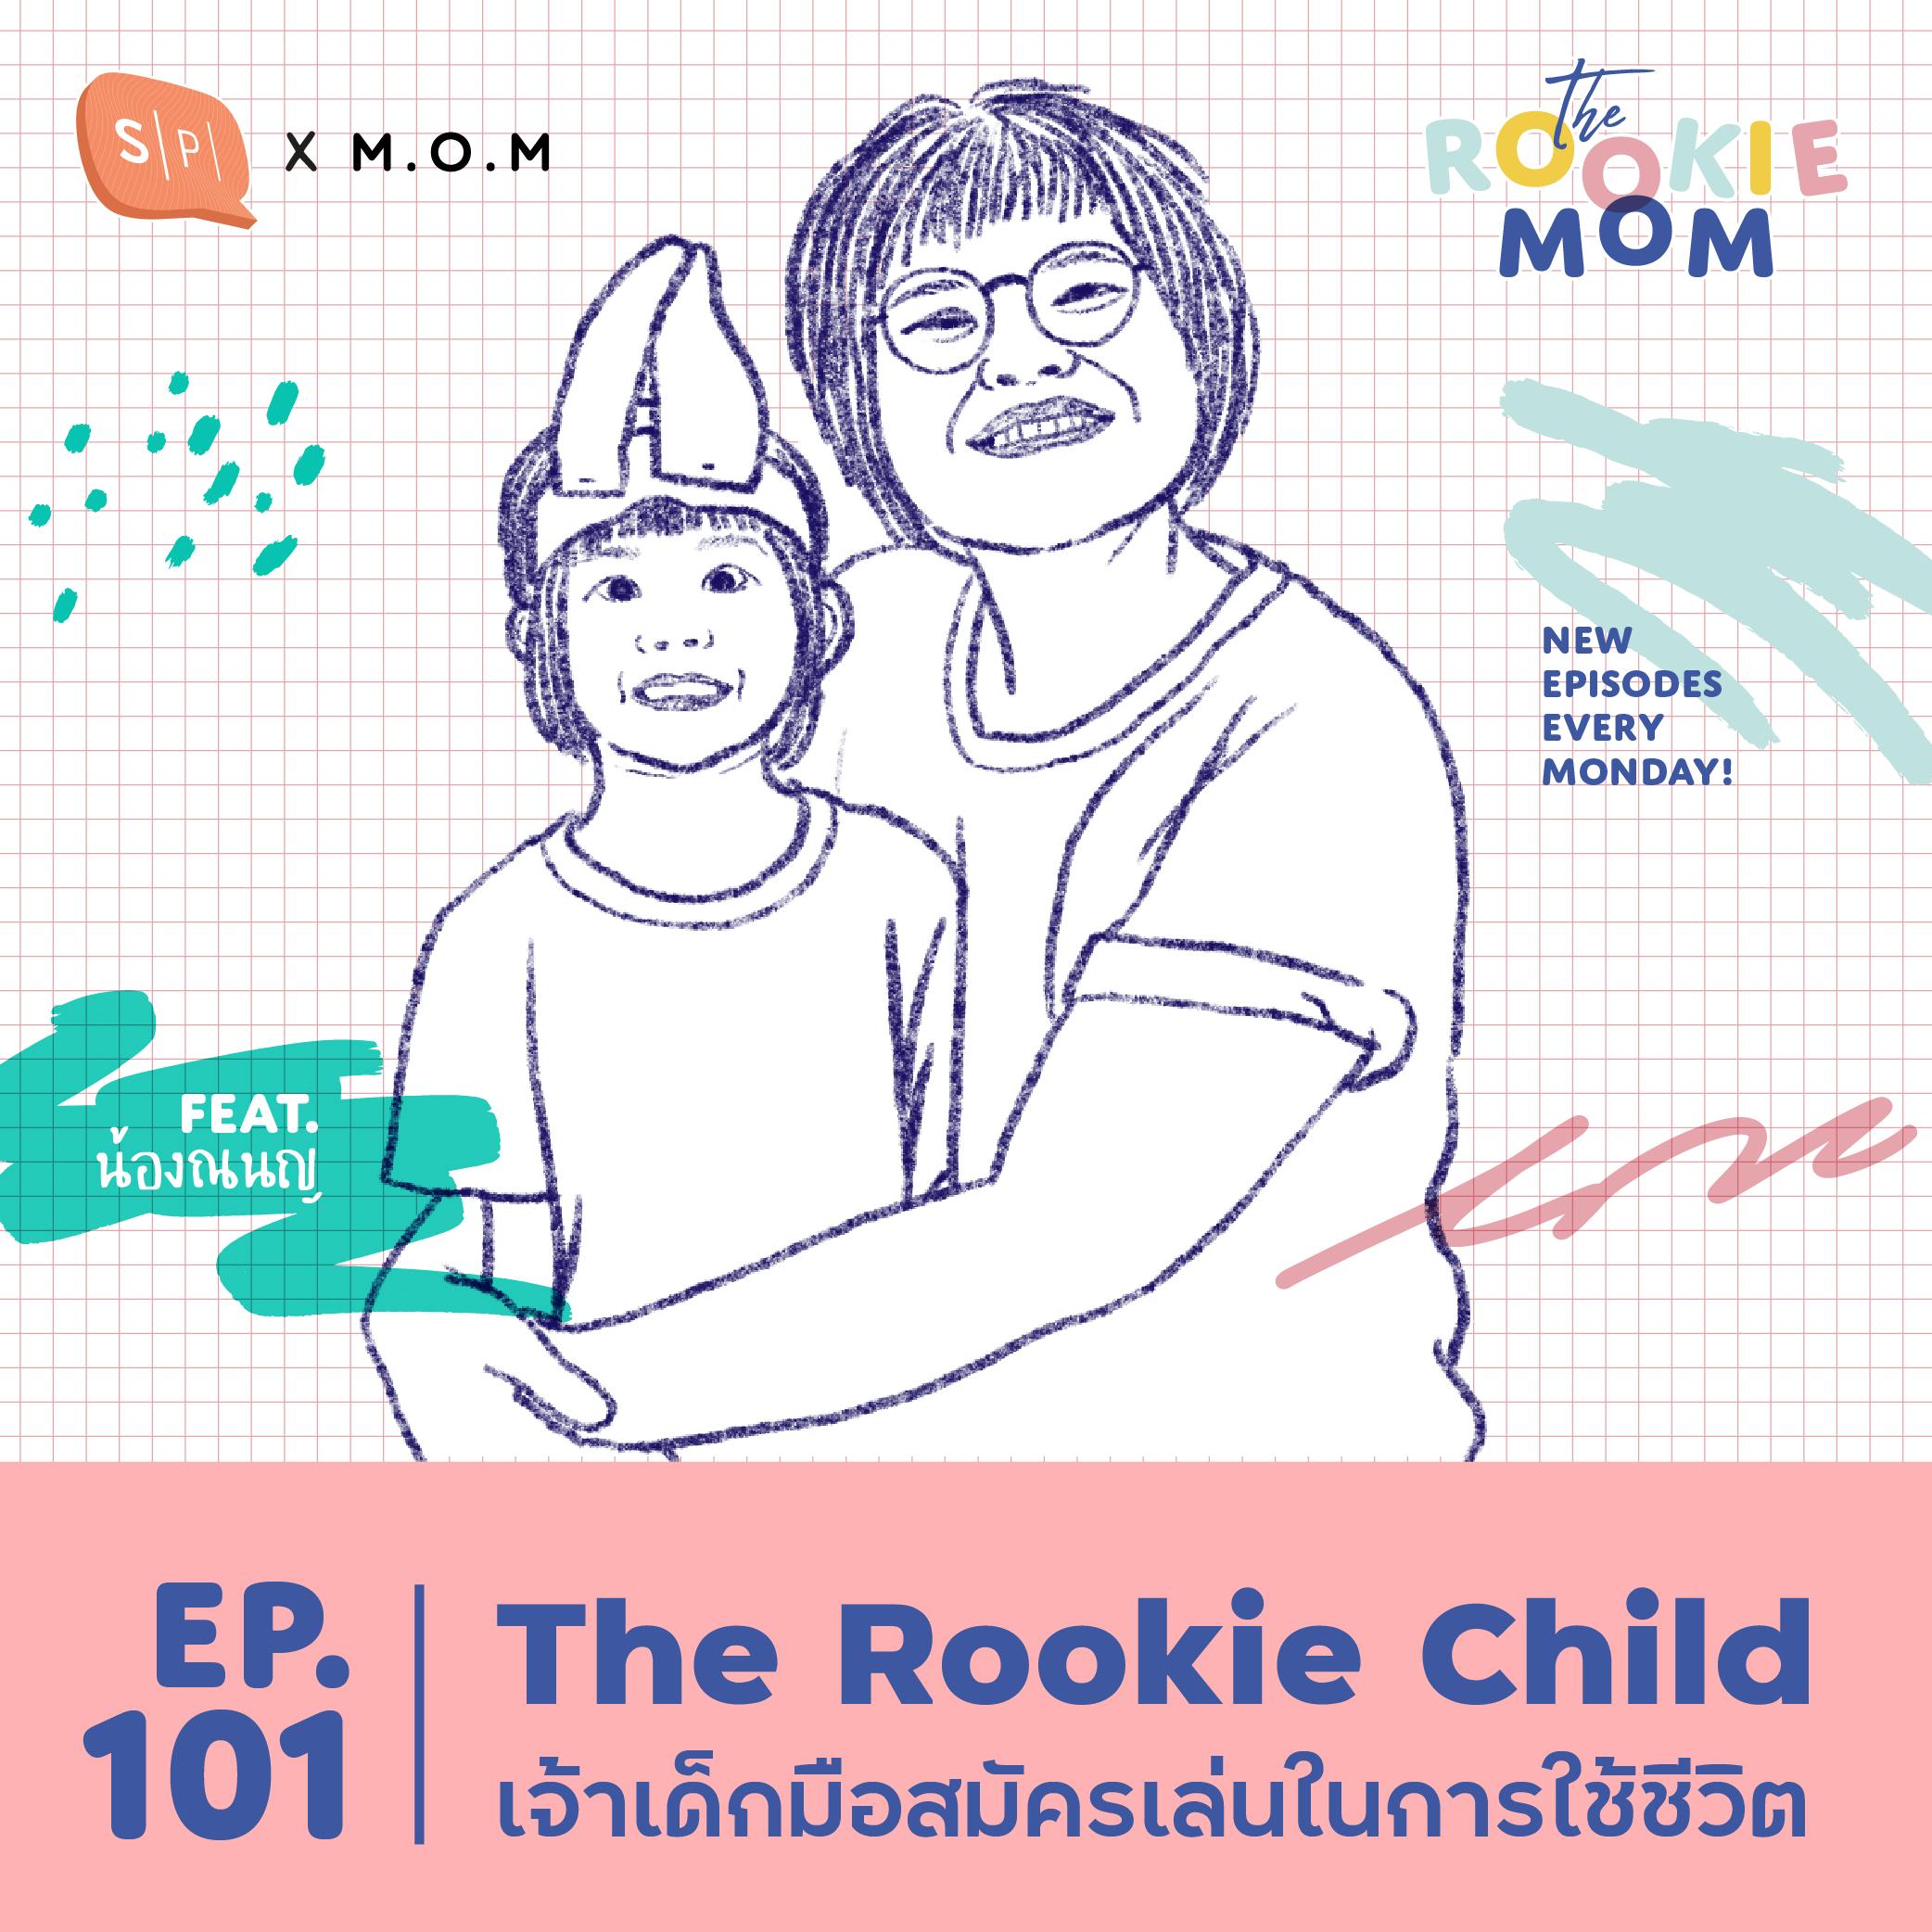 The Rookie Child เจ้าเด็กมือสมัครเล่นการใช้ชีวิต​ Feat. น้องณนญ | EP101